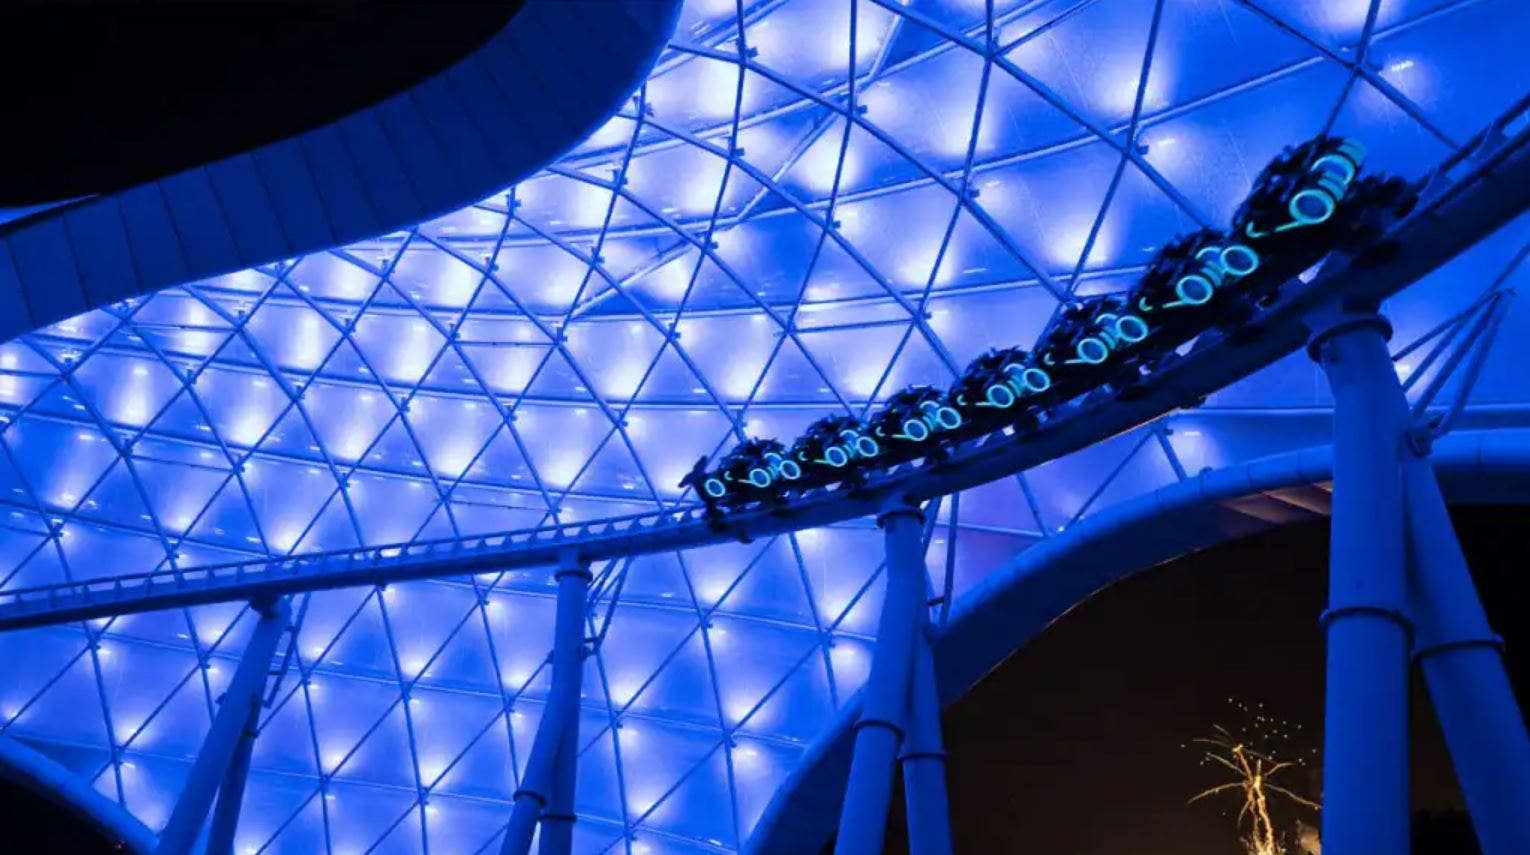 Walt Disney World publicizes opening date for latest rollercoaster TRON Lightcycle/Run